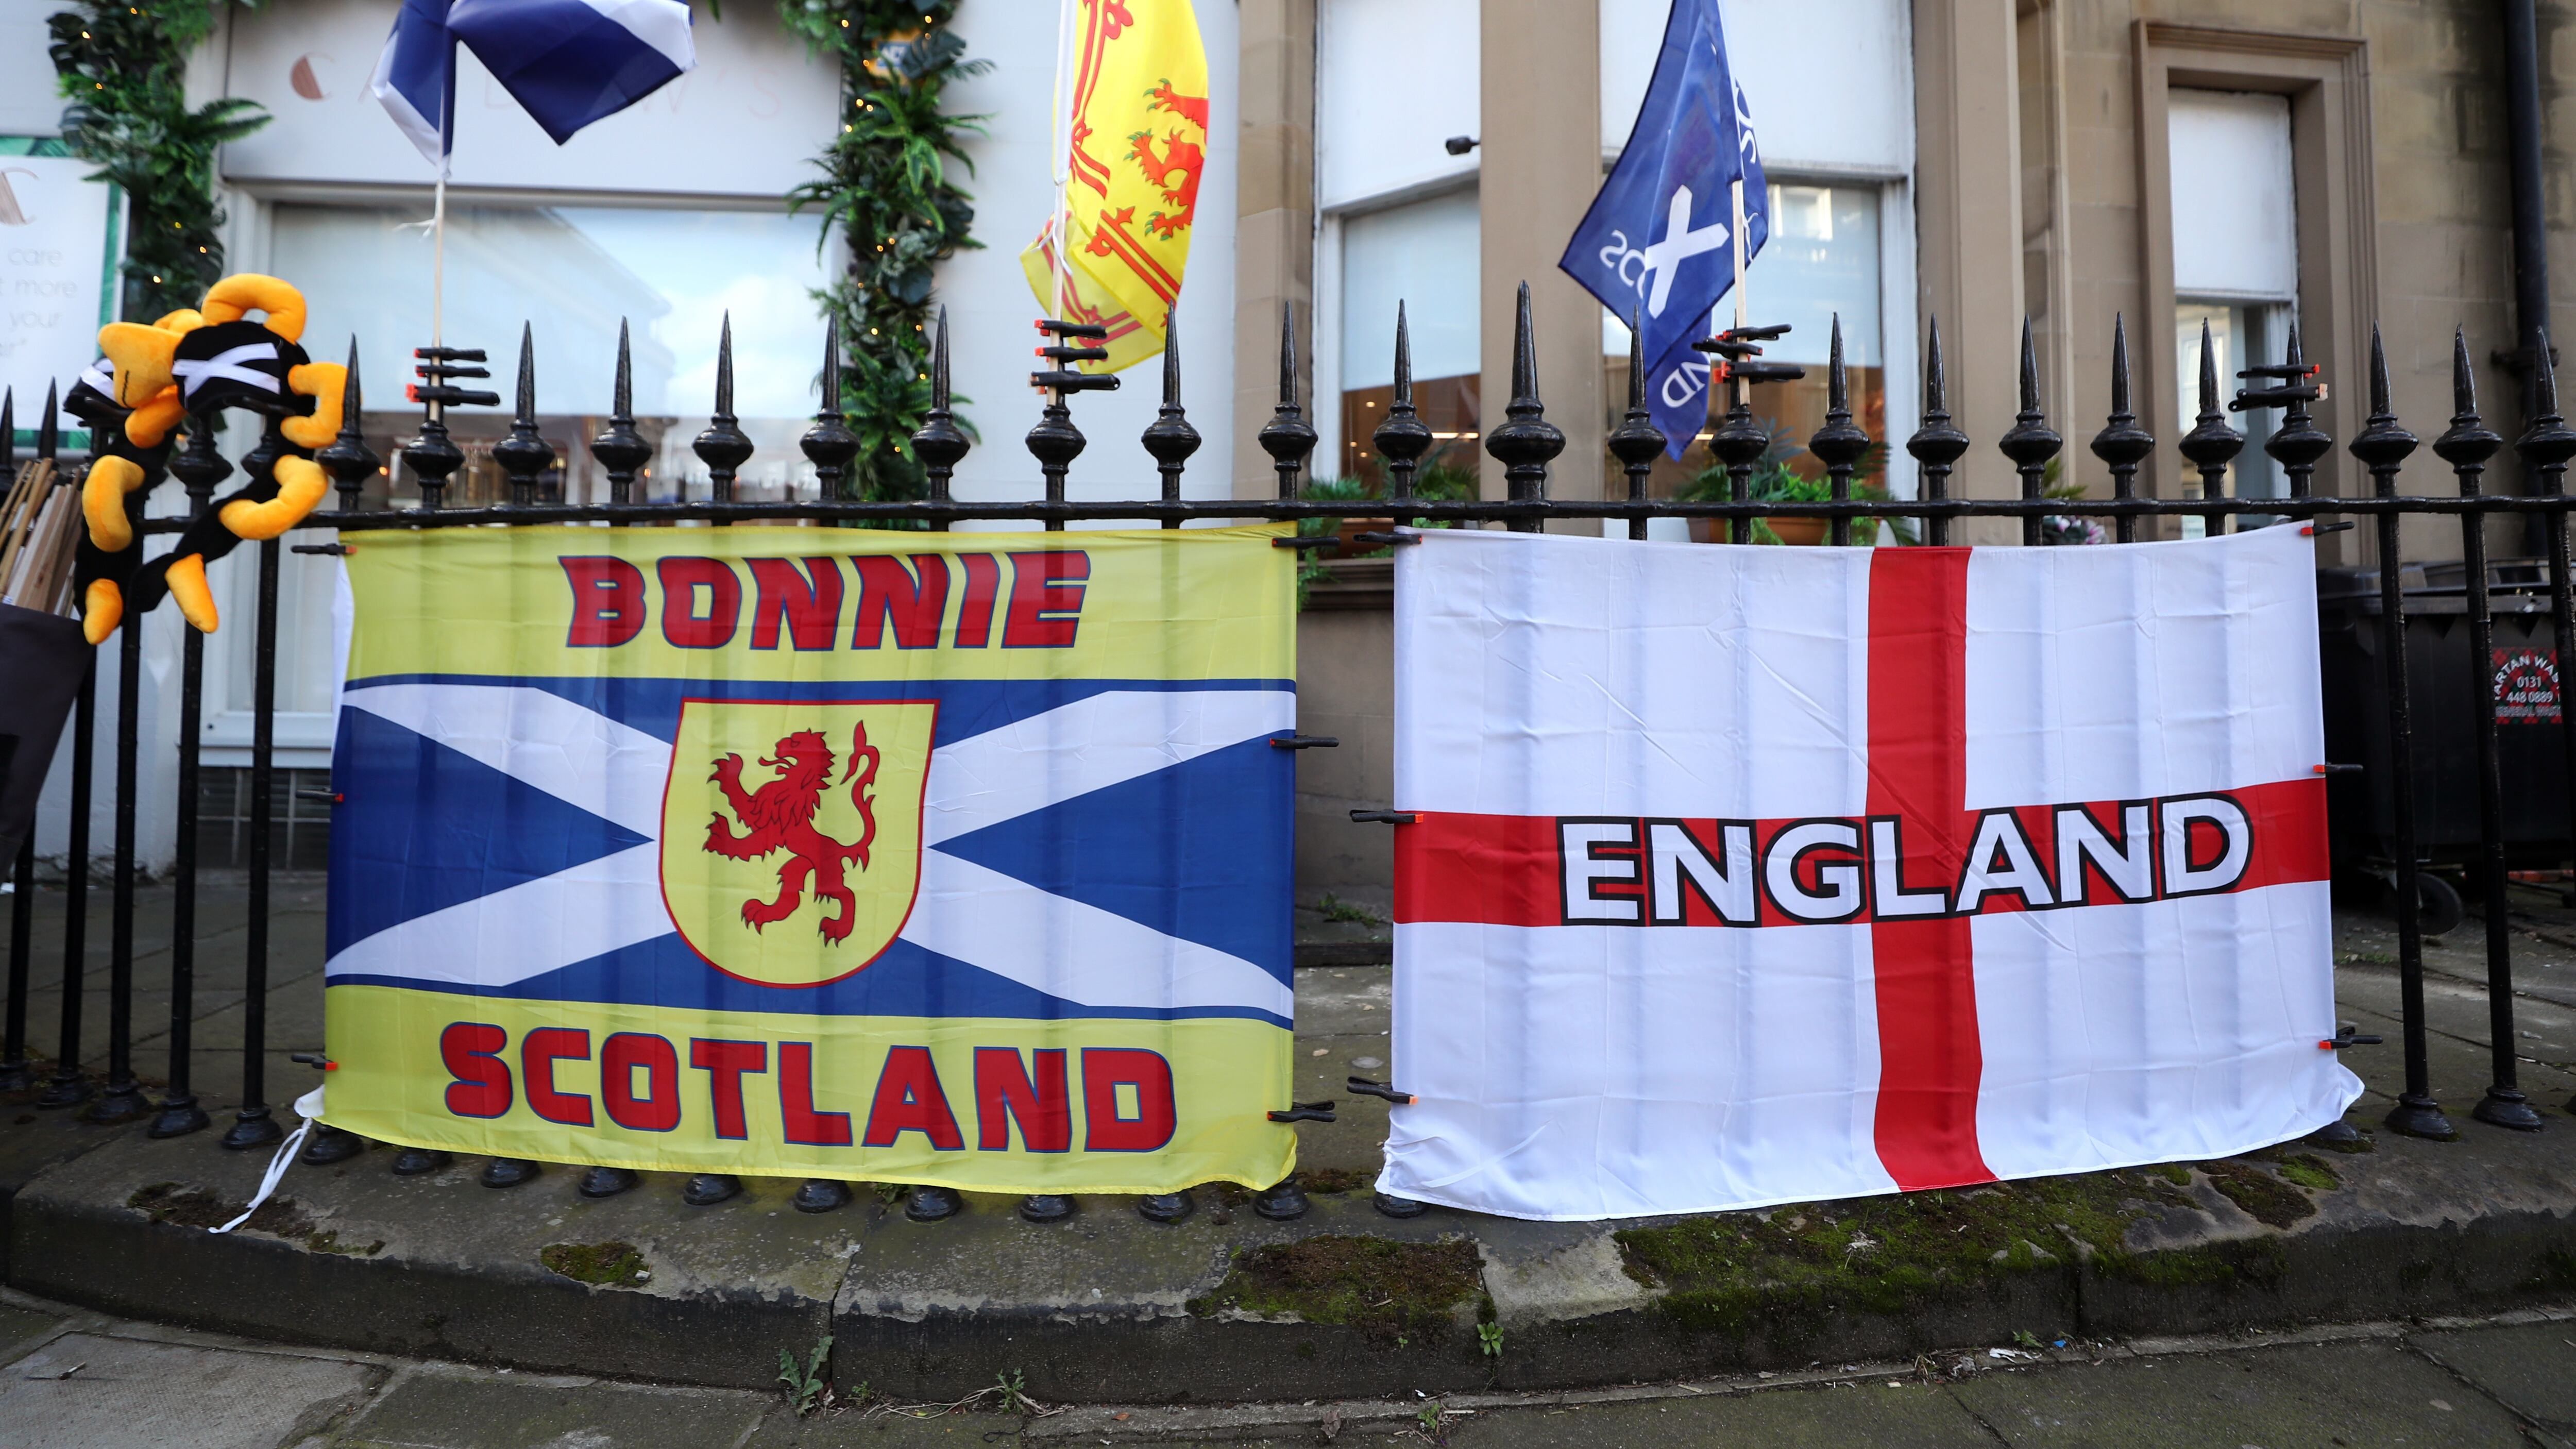 Scotland and England flags